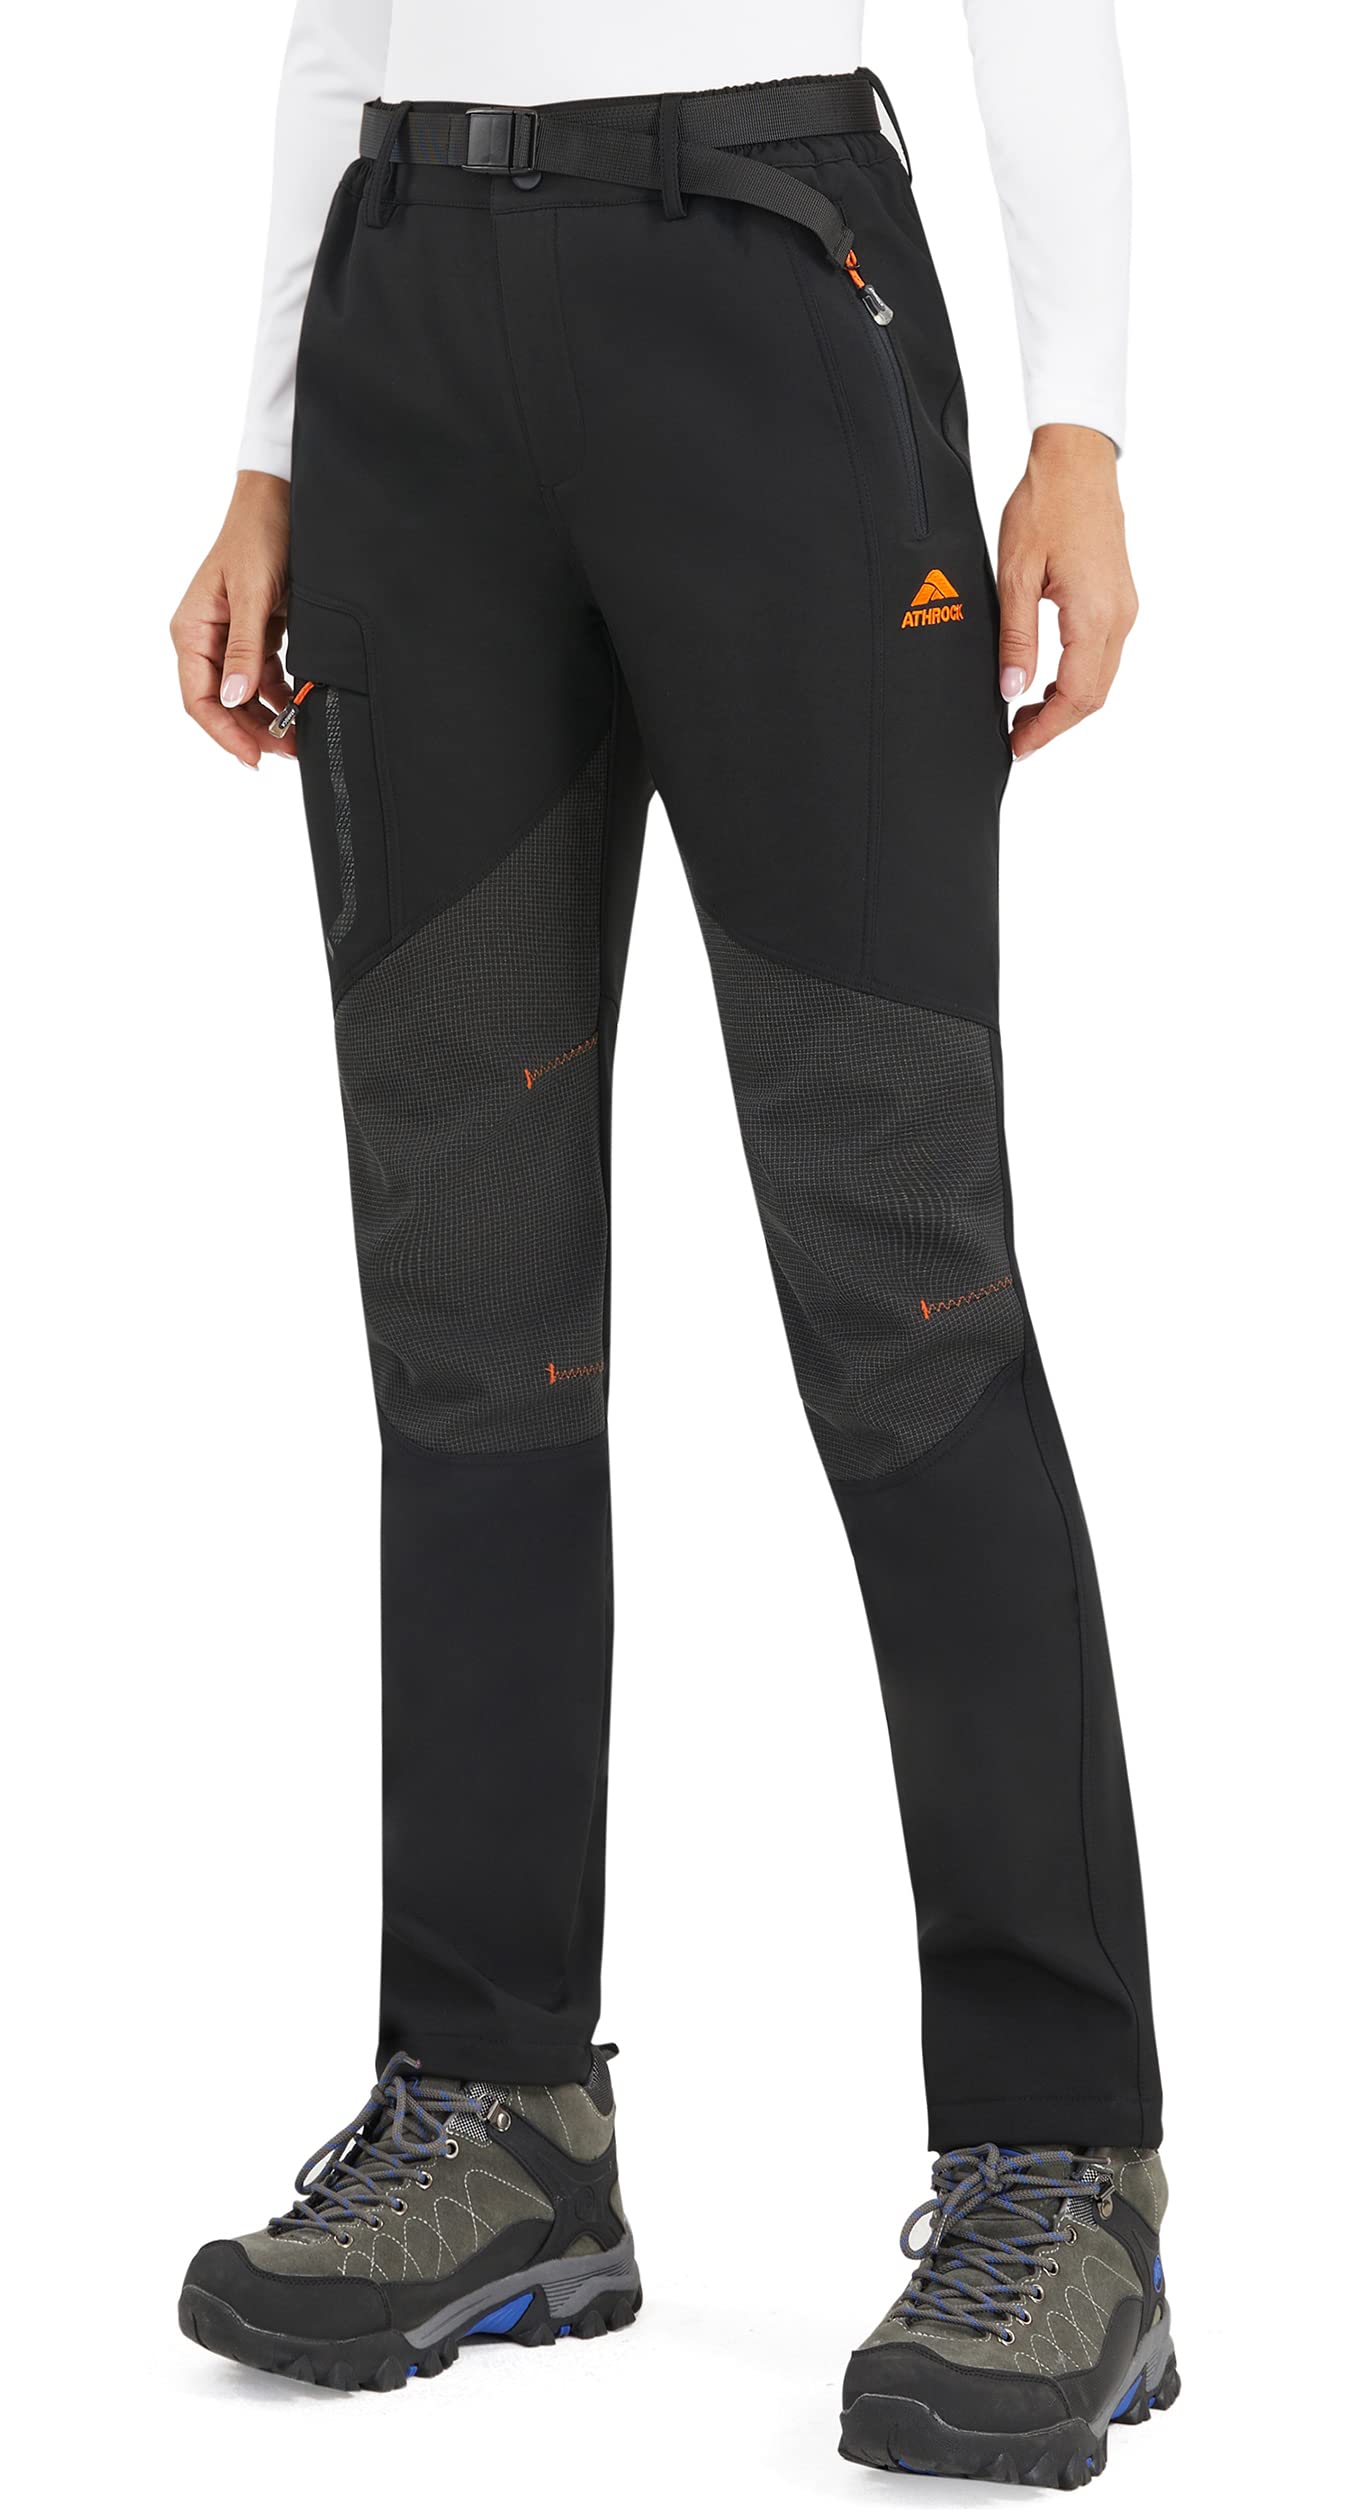 Athrock Women's Snow Ski Waterproof Windproof Fleece Lined Cargo Hiking  Pants with 4 Zipper Pockets Small Black